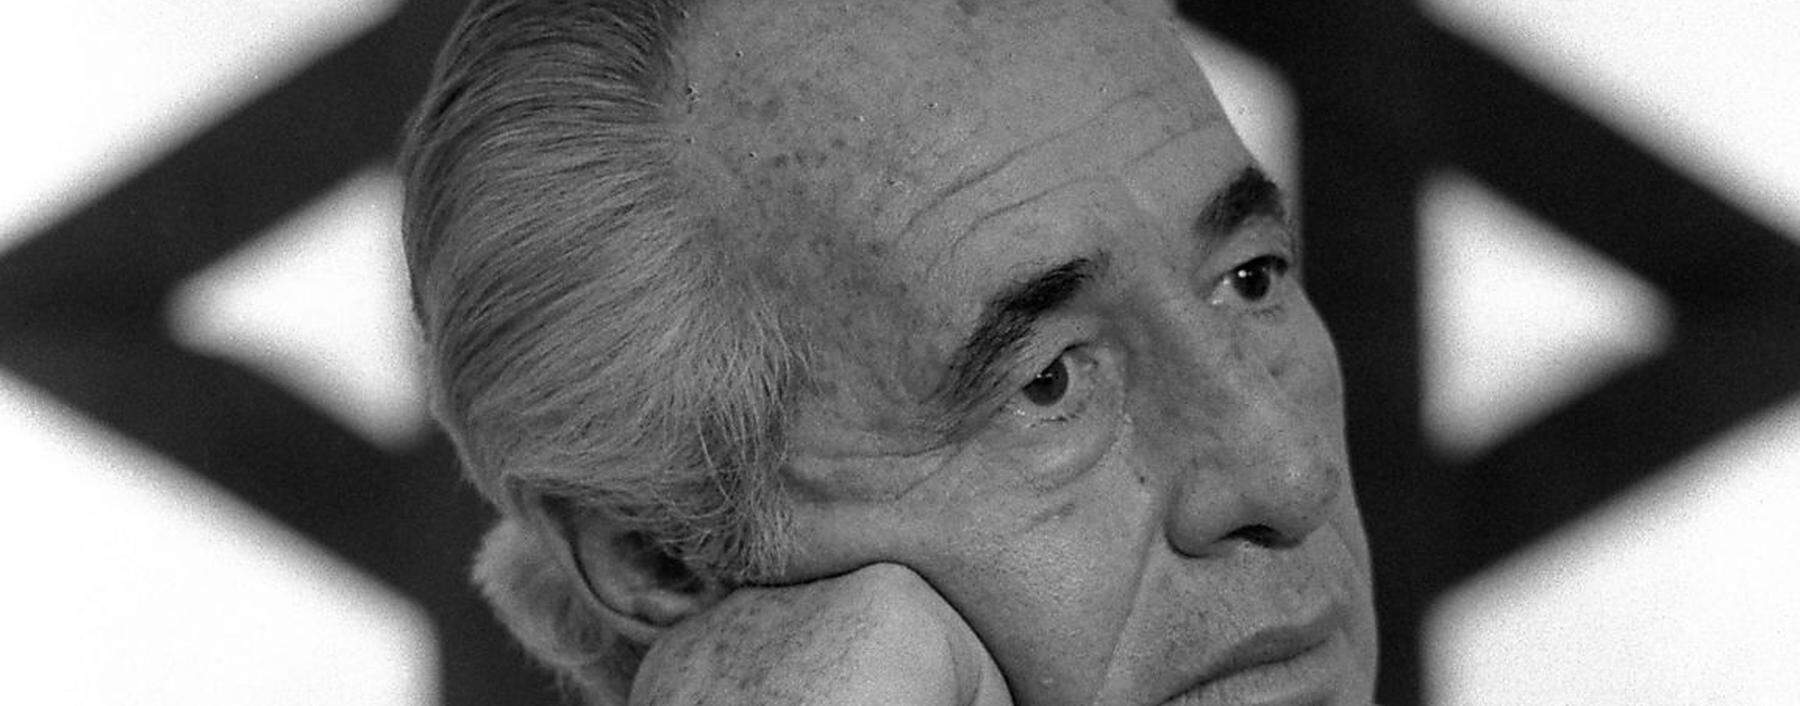 Ein Leben für Israel: Shimon Peres